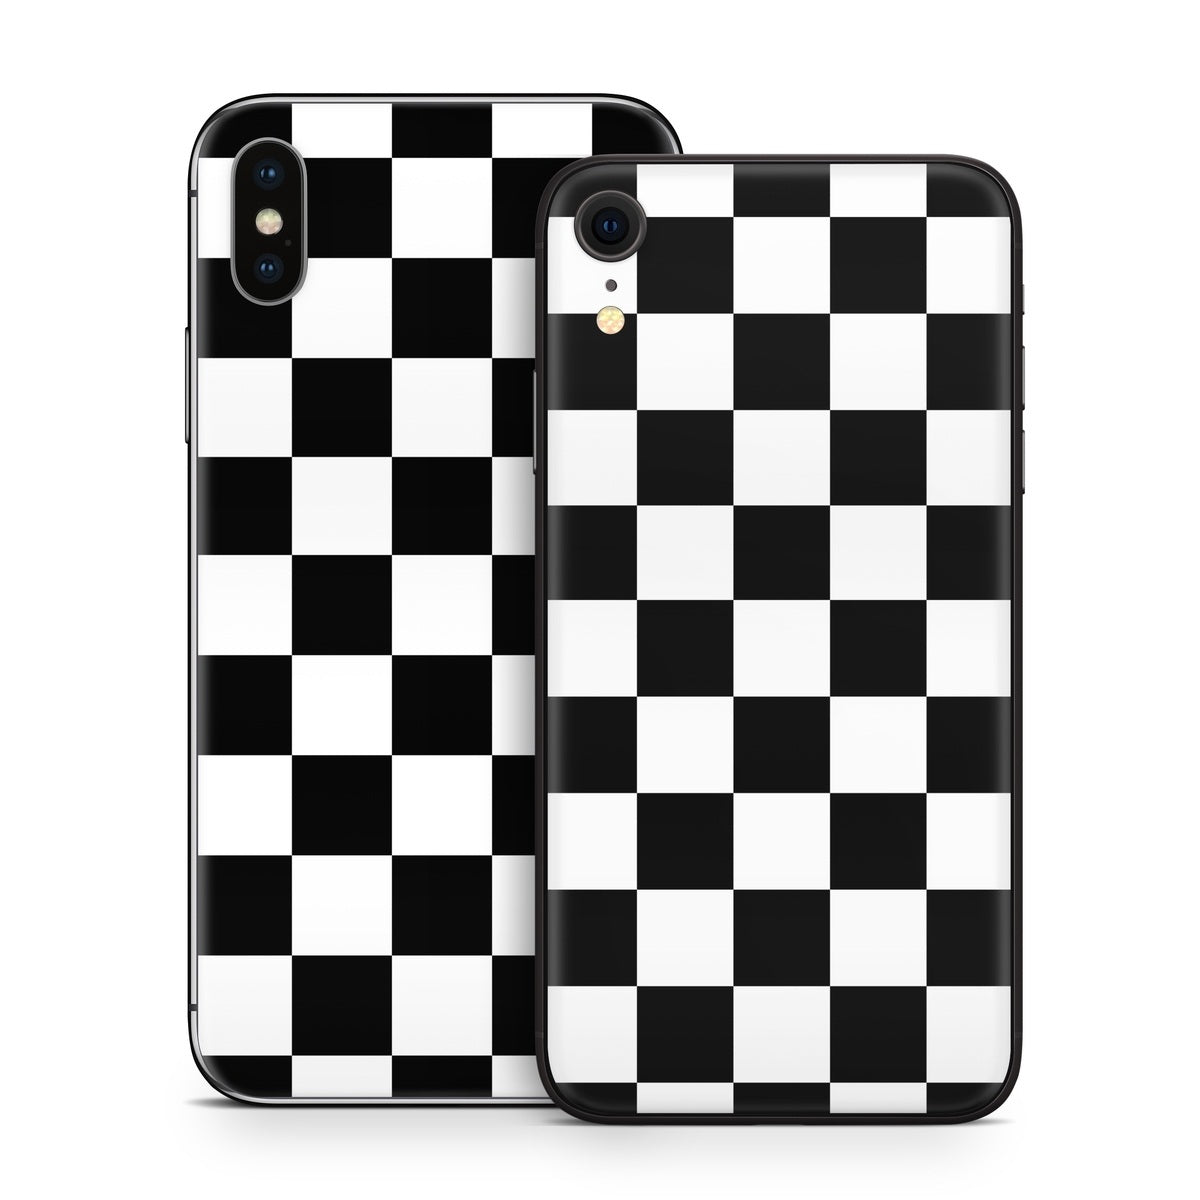 Checkers - Apple iPhone X Skin